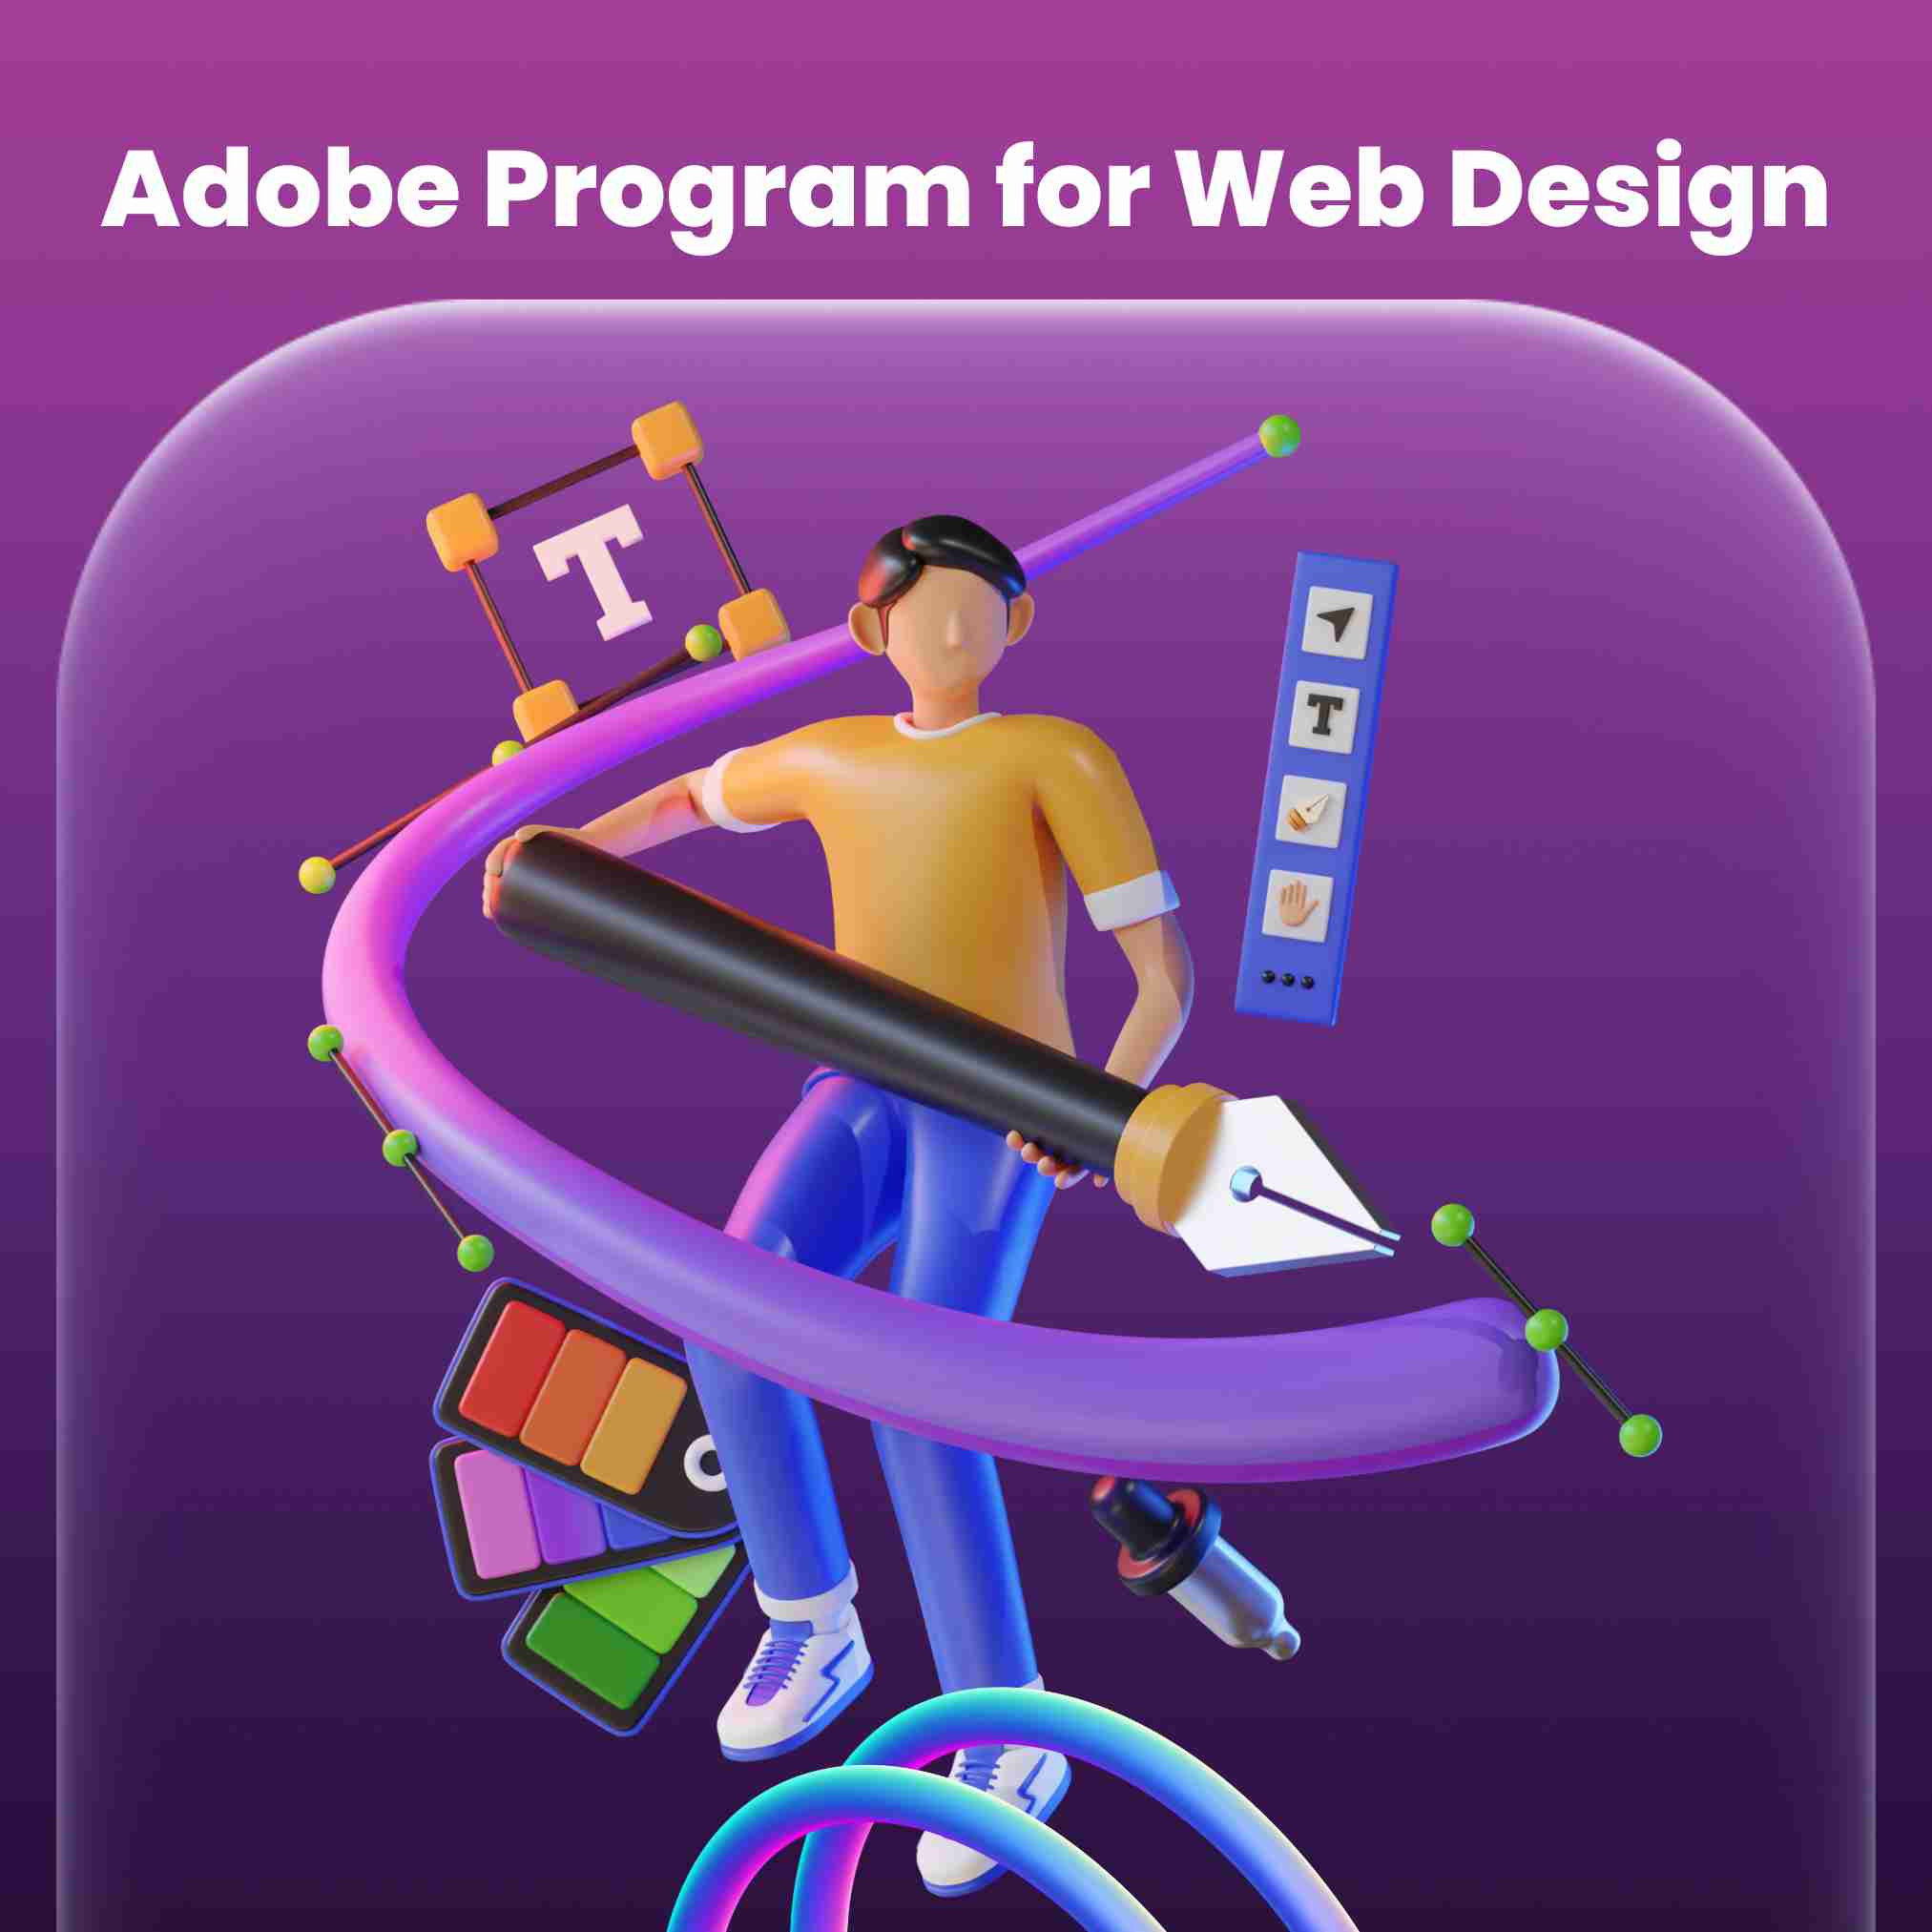 Adobe Program for Web Design